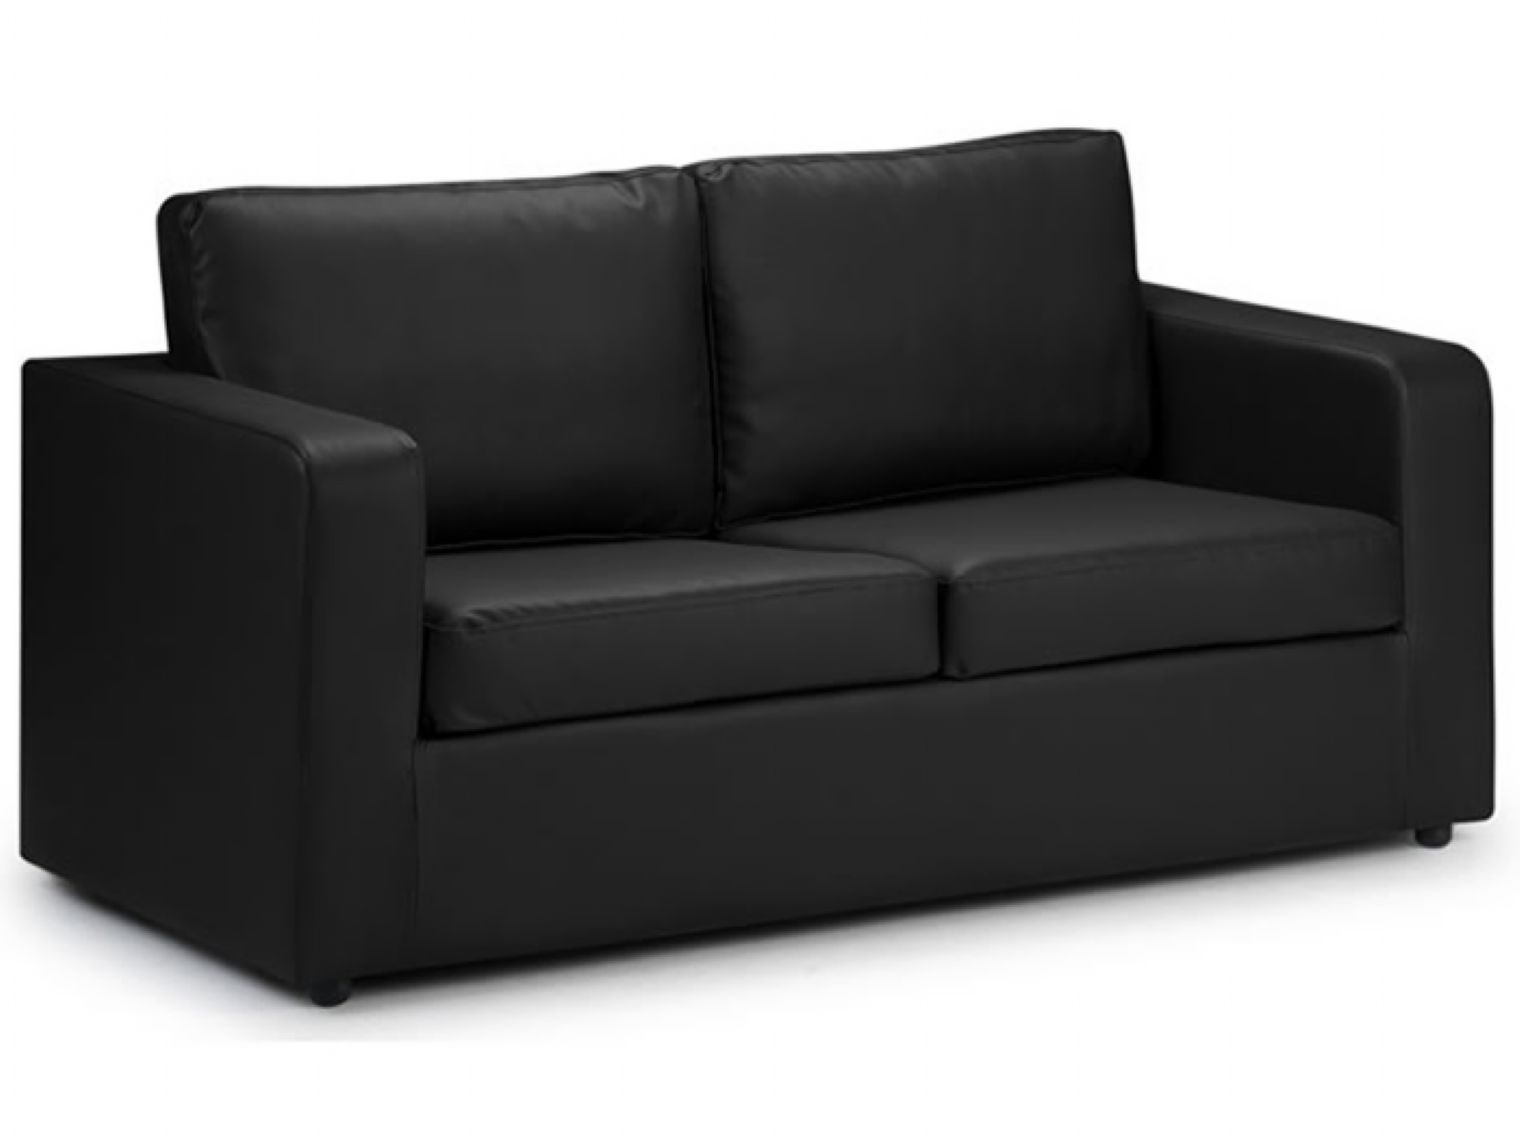 Leather Sofa Beds Ikea Home Design